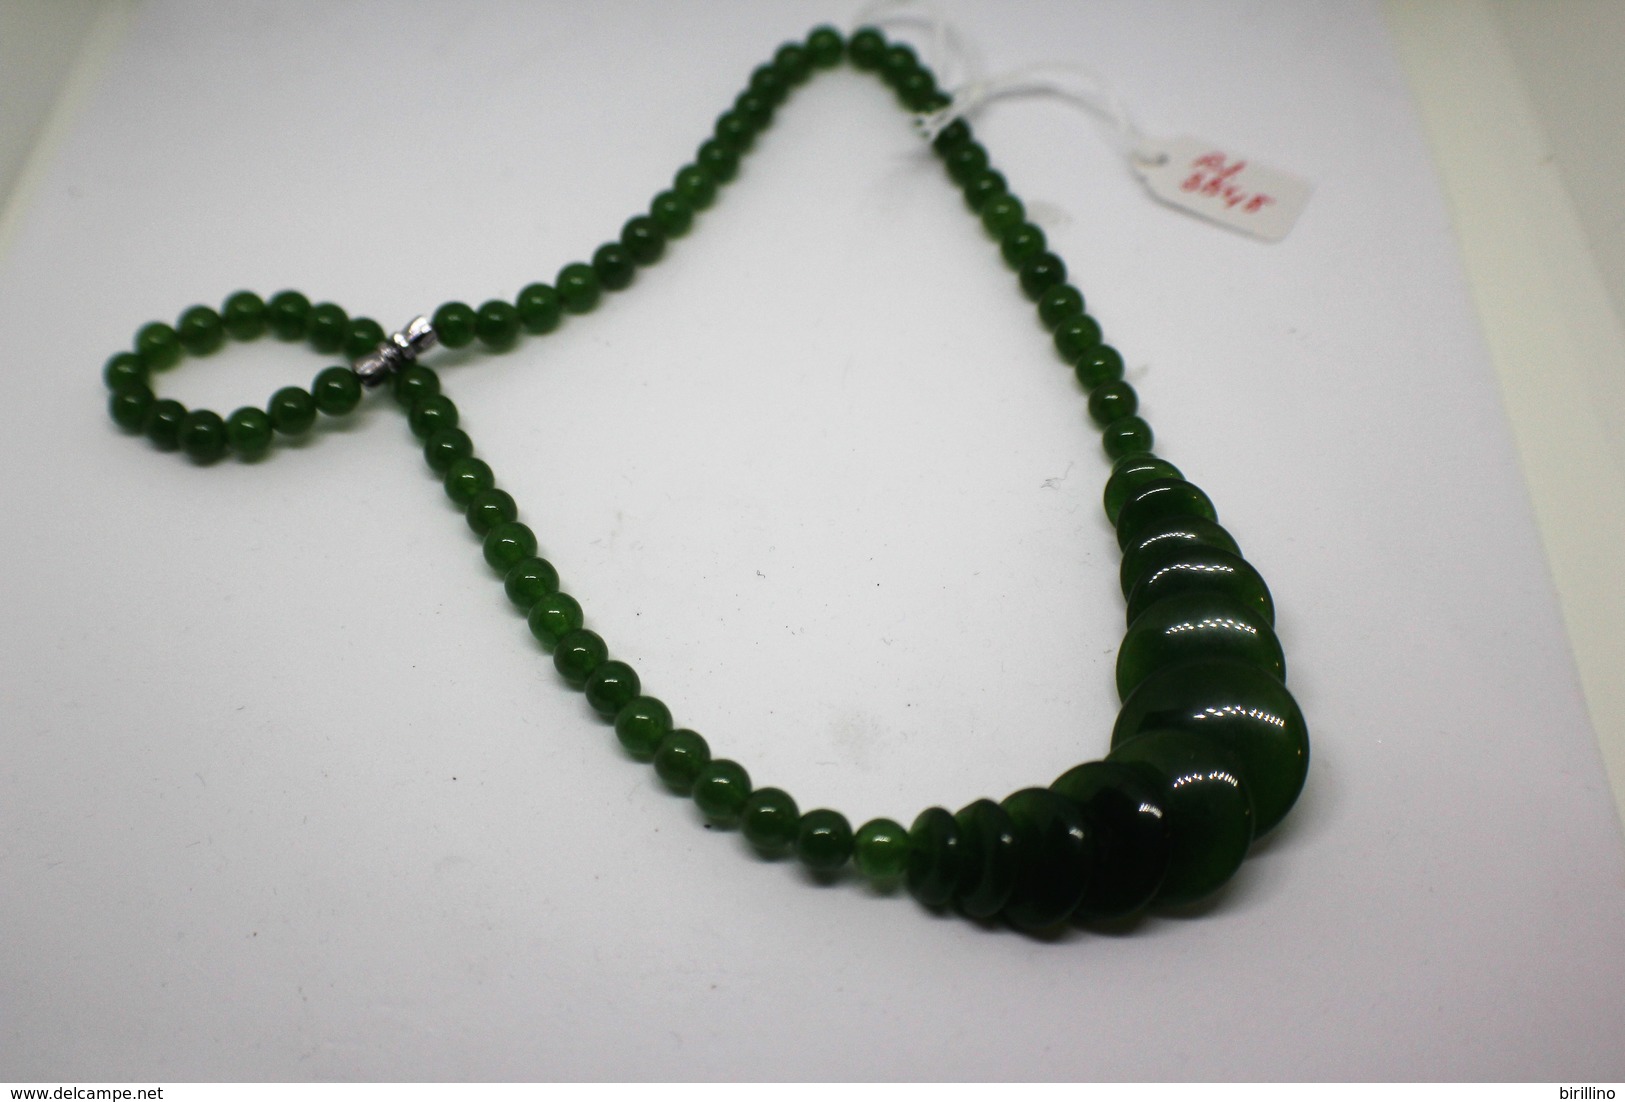 3848 - Collana Di Giada Naturale (serpentino New Jade) Lucidata A Mano. Peso Totale 38 Gr. - Arte Oriental